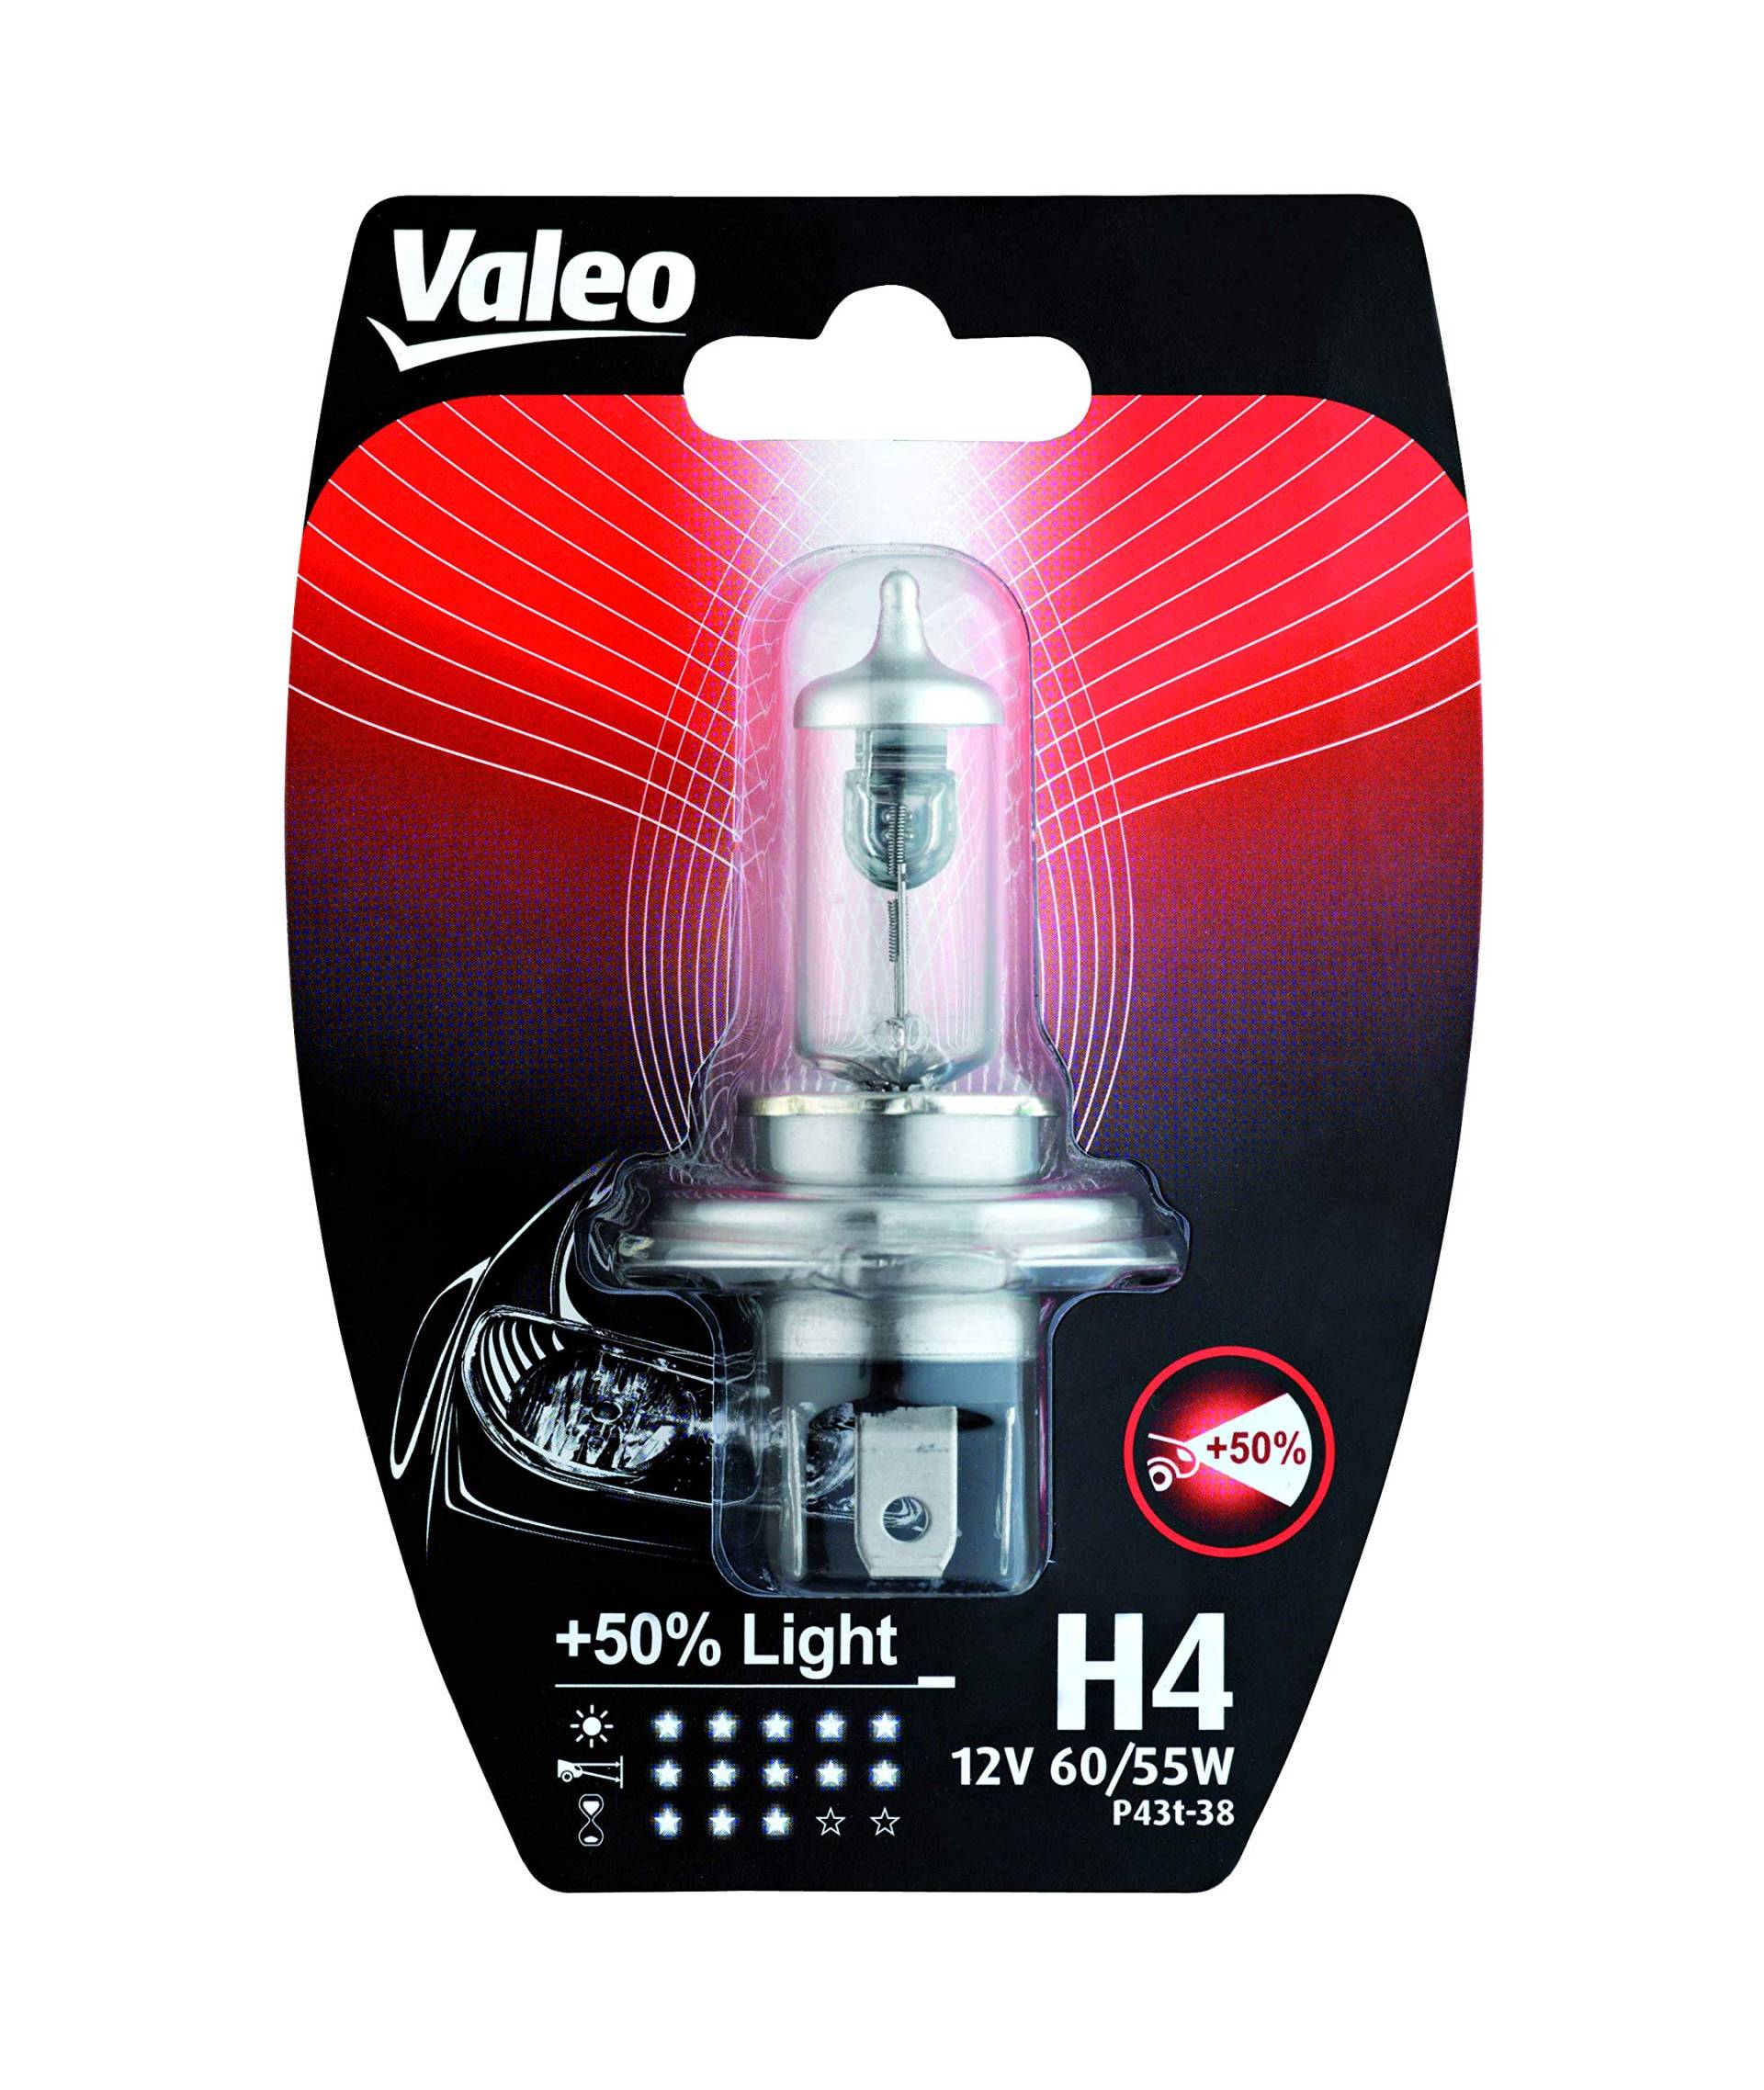 Valeo Halogen Glühlampe, H4-+ 50% Light-Blister x1, 32510 von Valeo